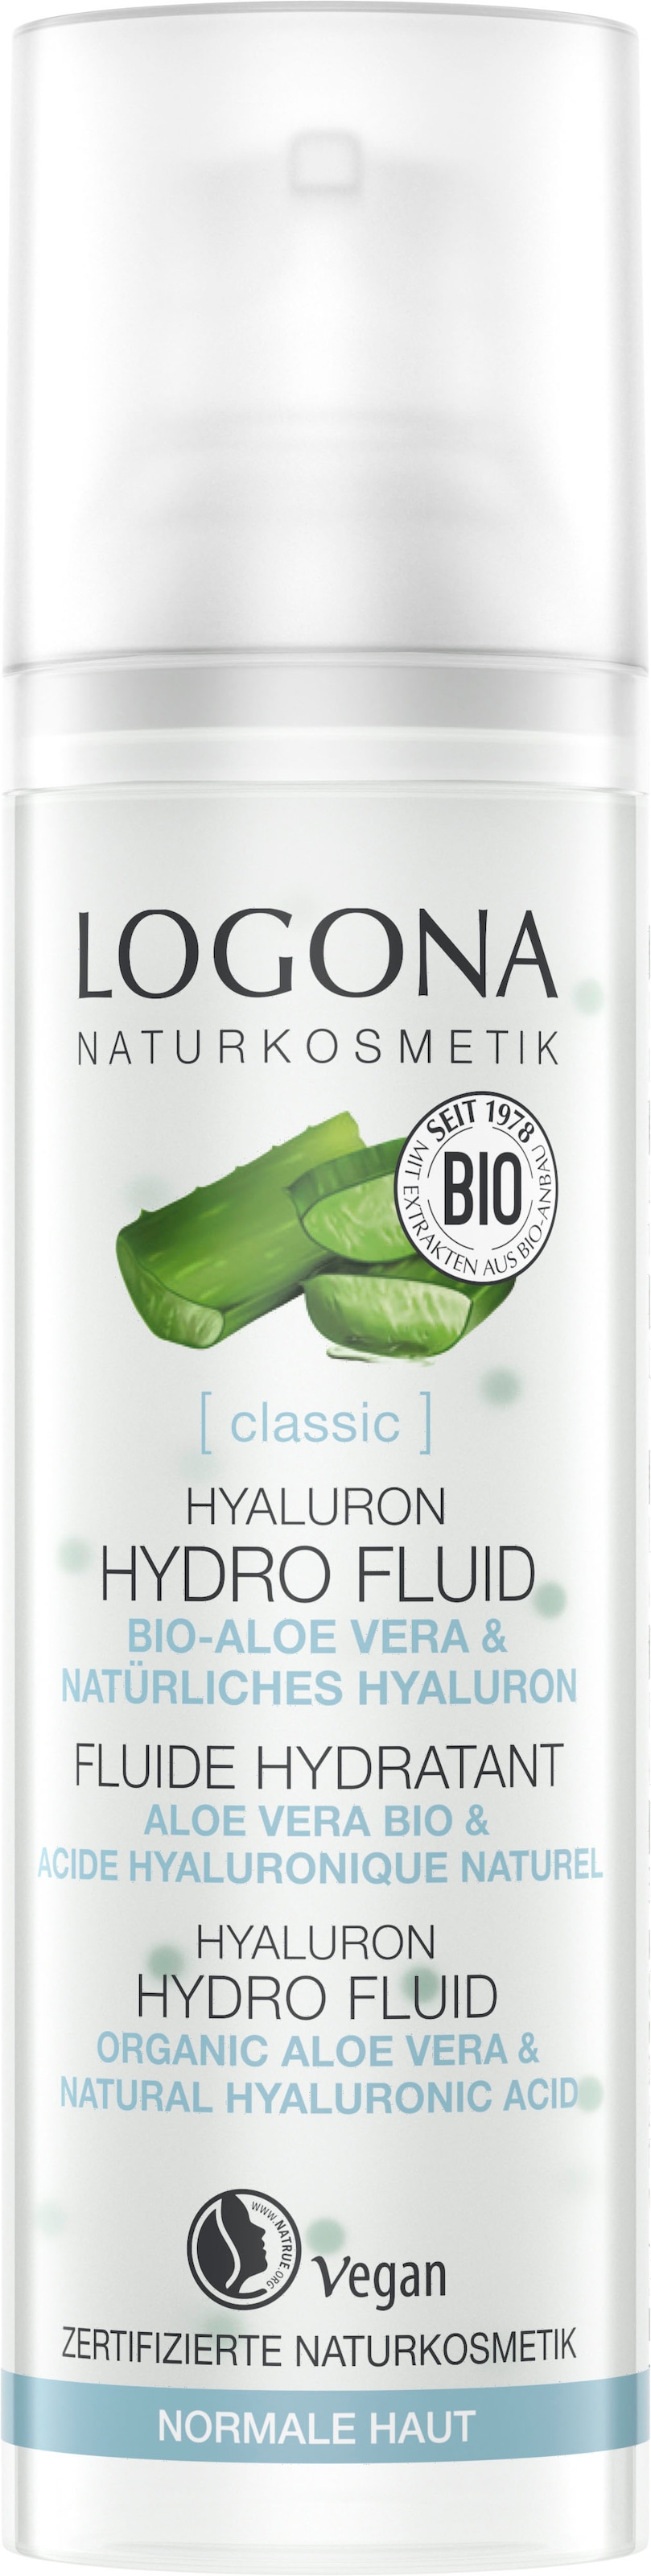 classic »Logona Gesichtsfluid bei Hydro ♕ Hyaluron Fluid« LOGONA